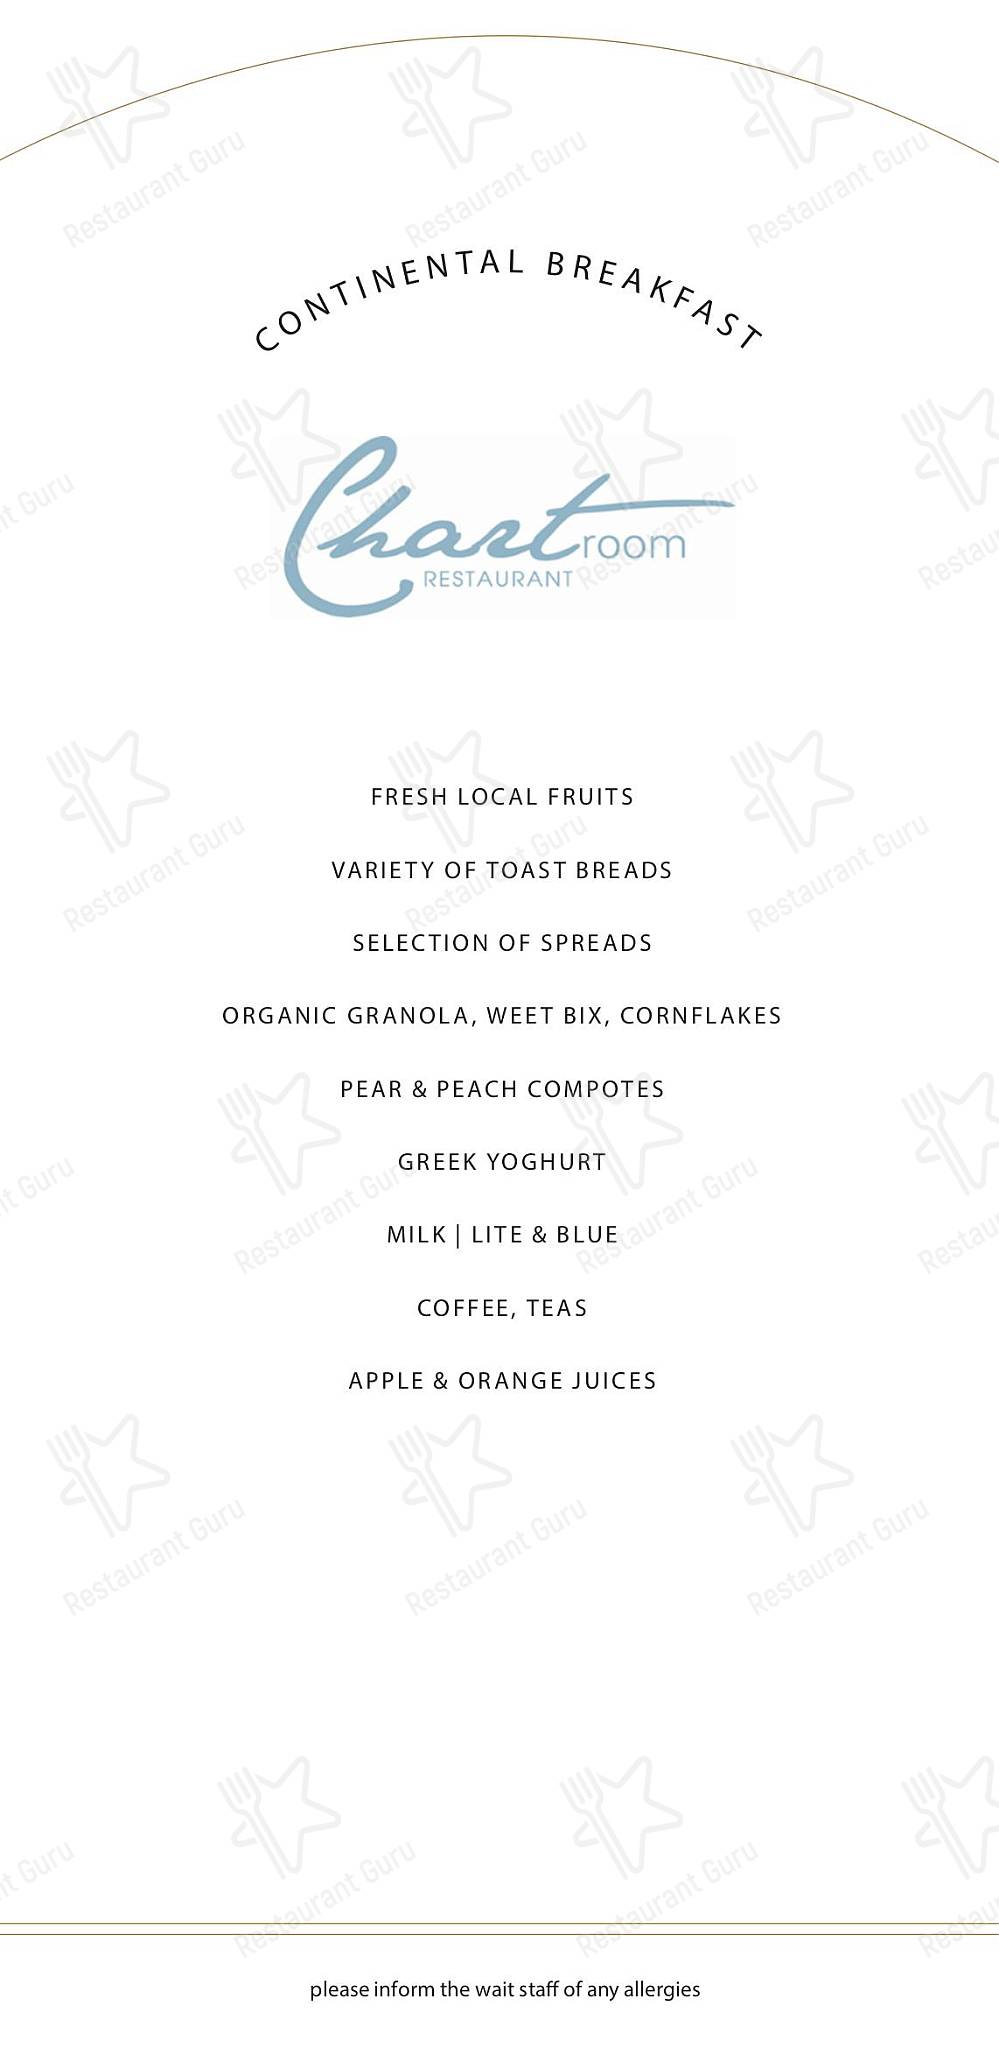 picton yacht club hotel restaurant menu